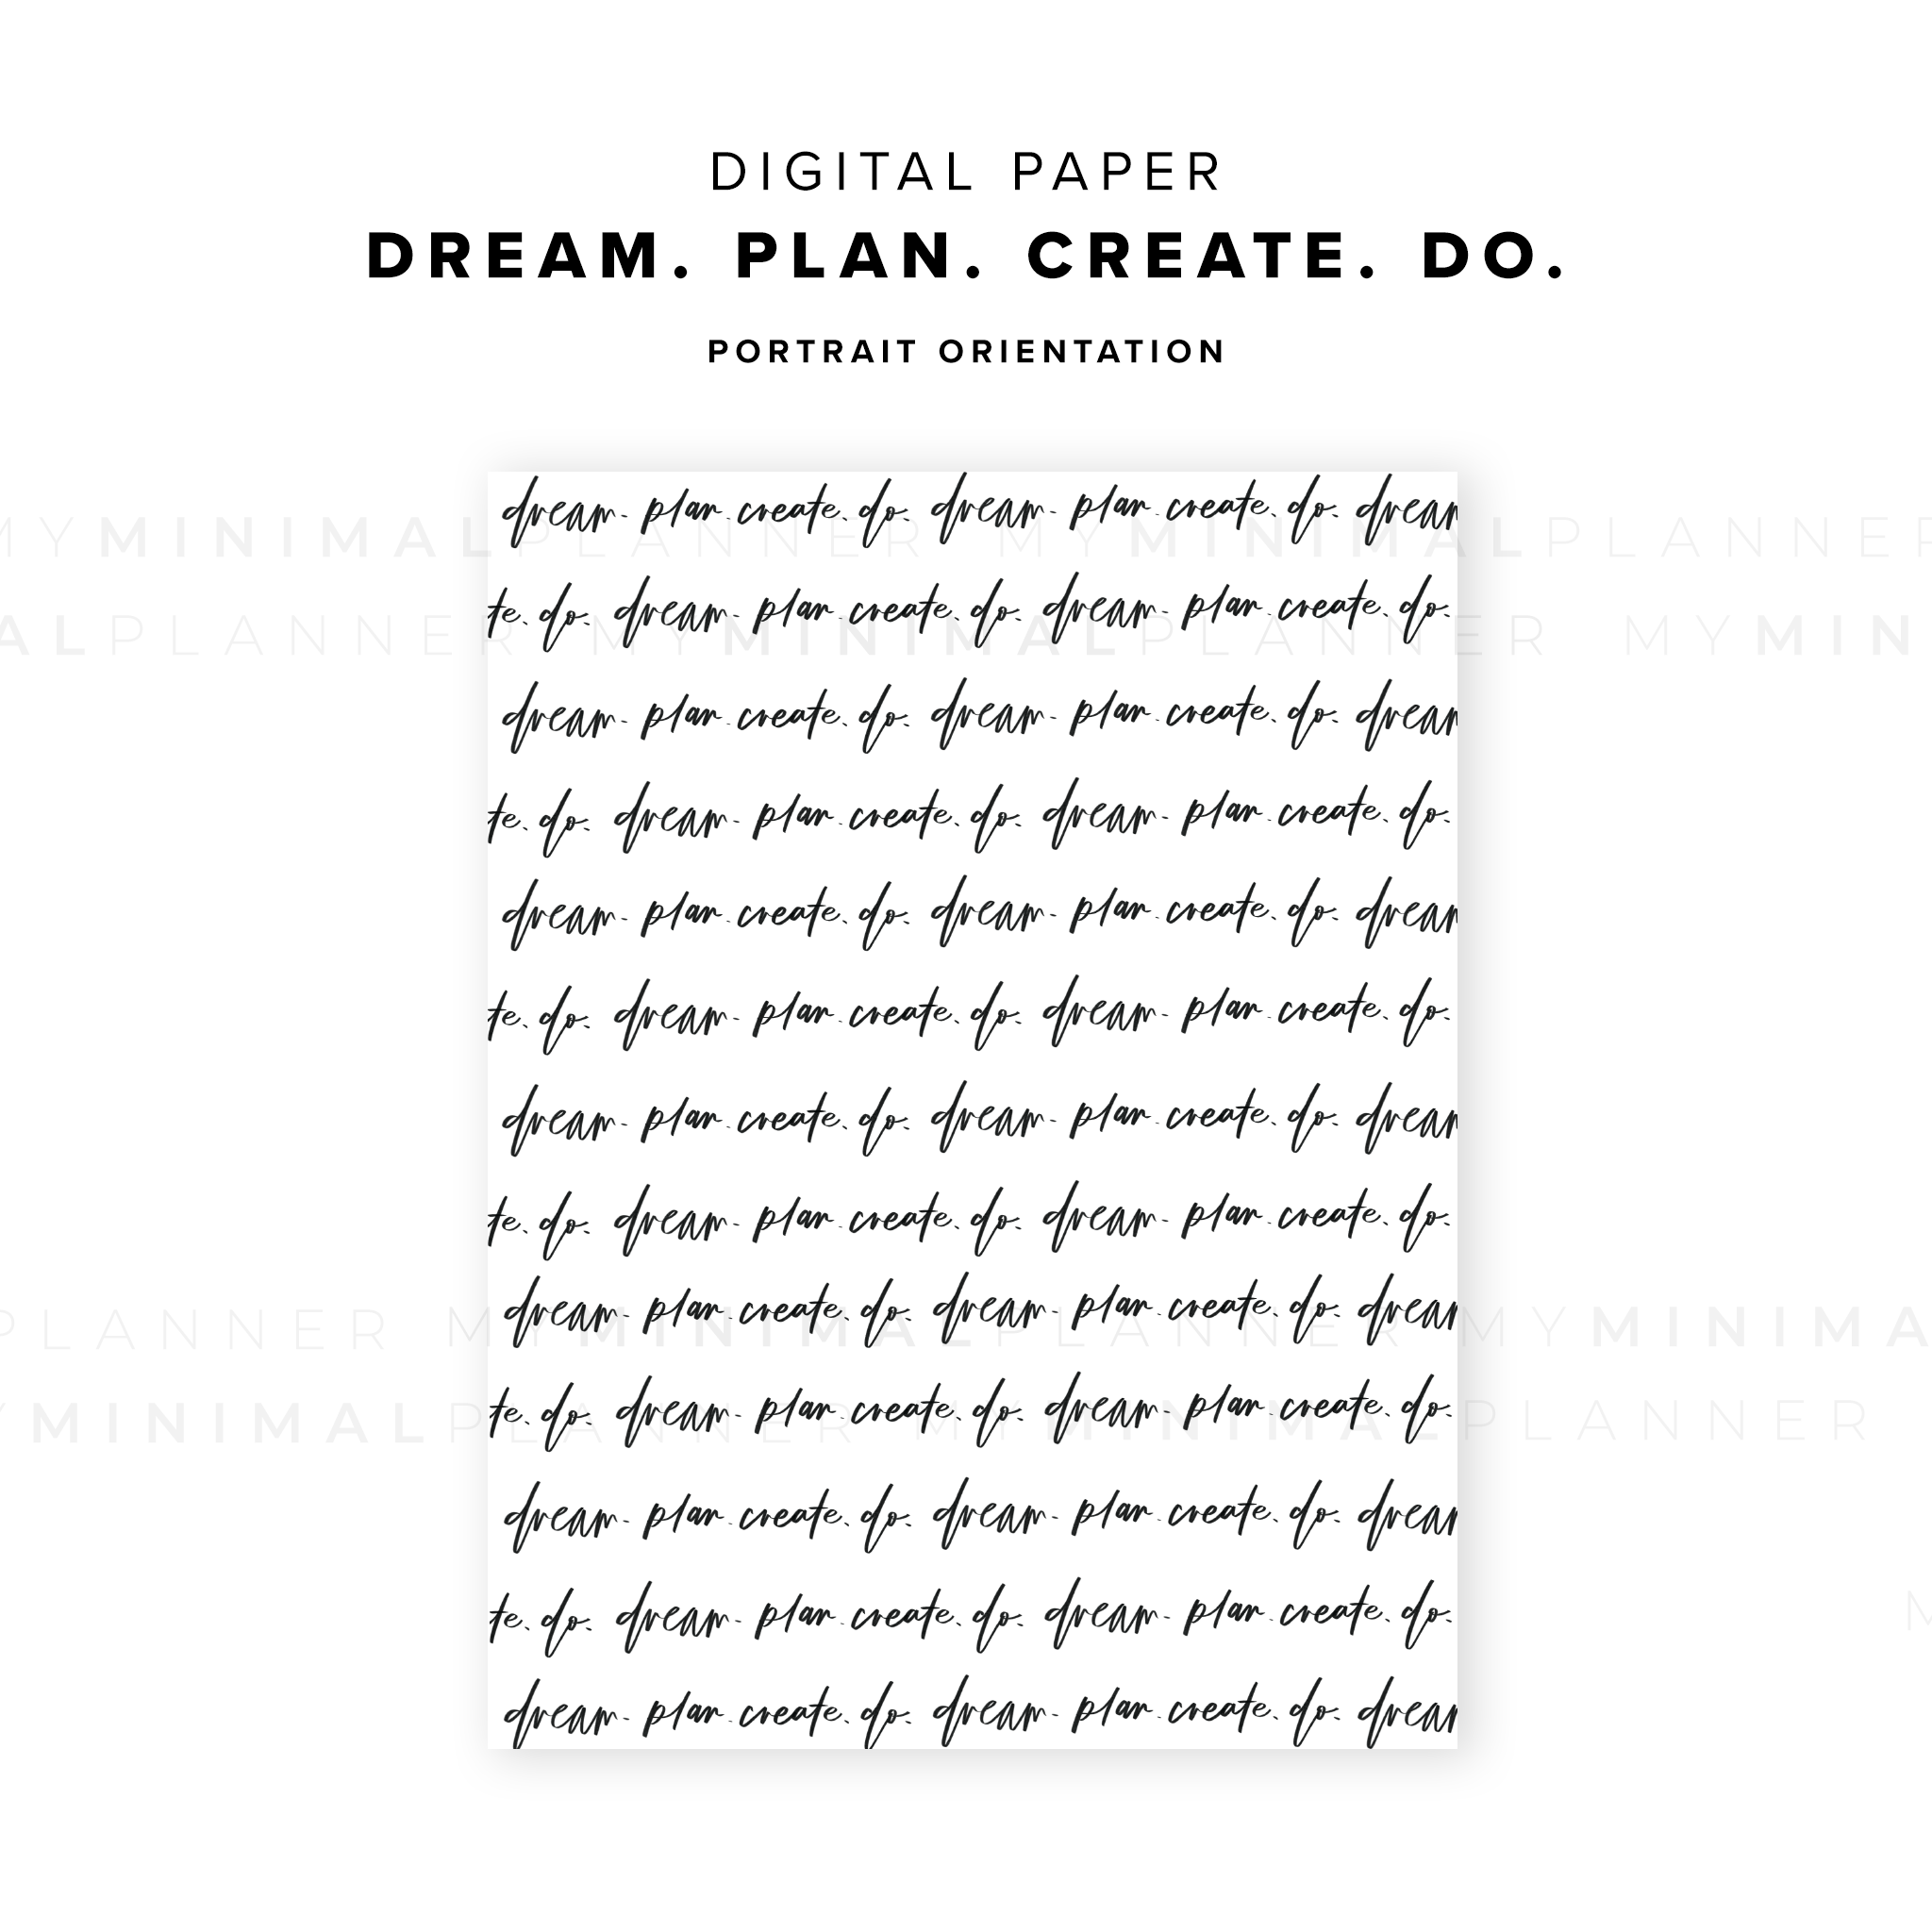 DP01 - Dream. Plan. Create. Do. - Digital Paper